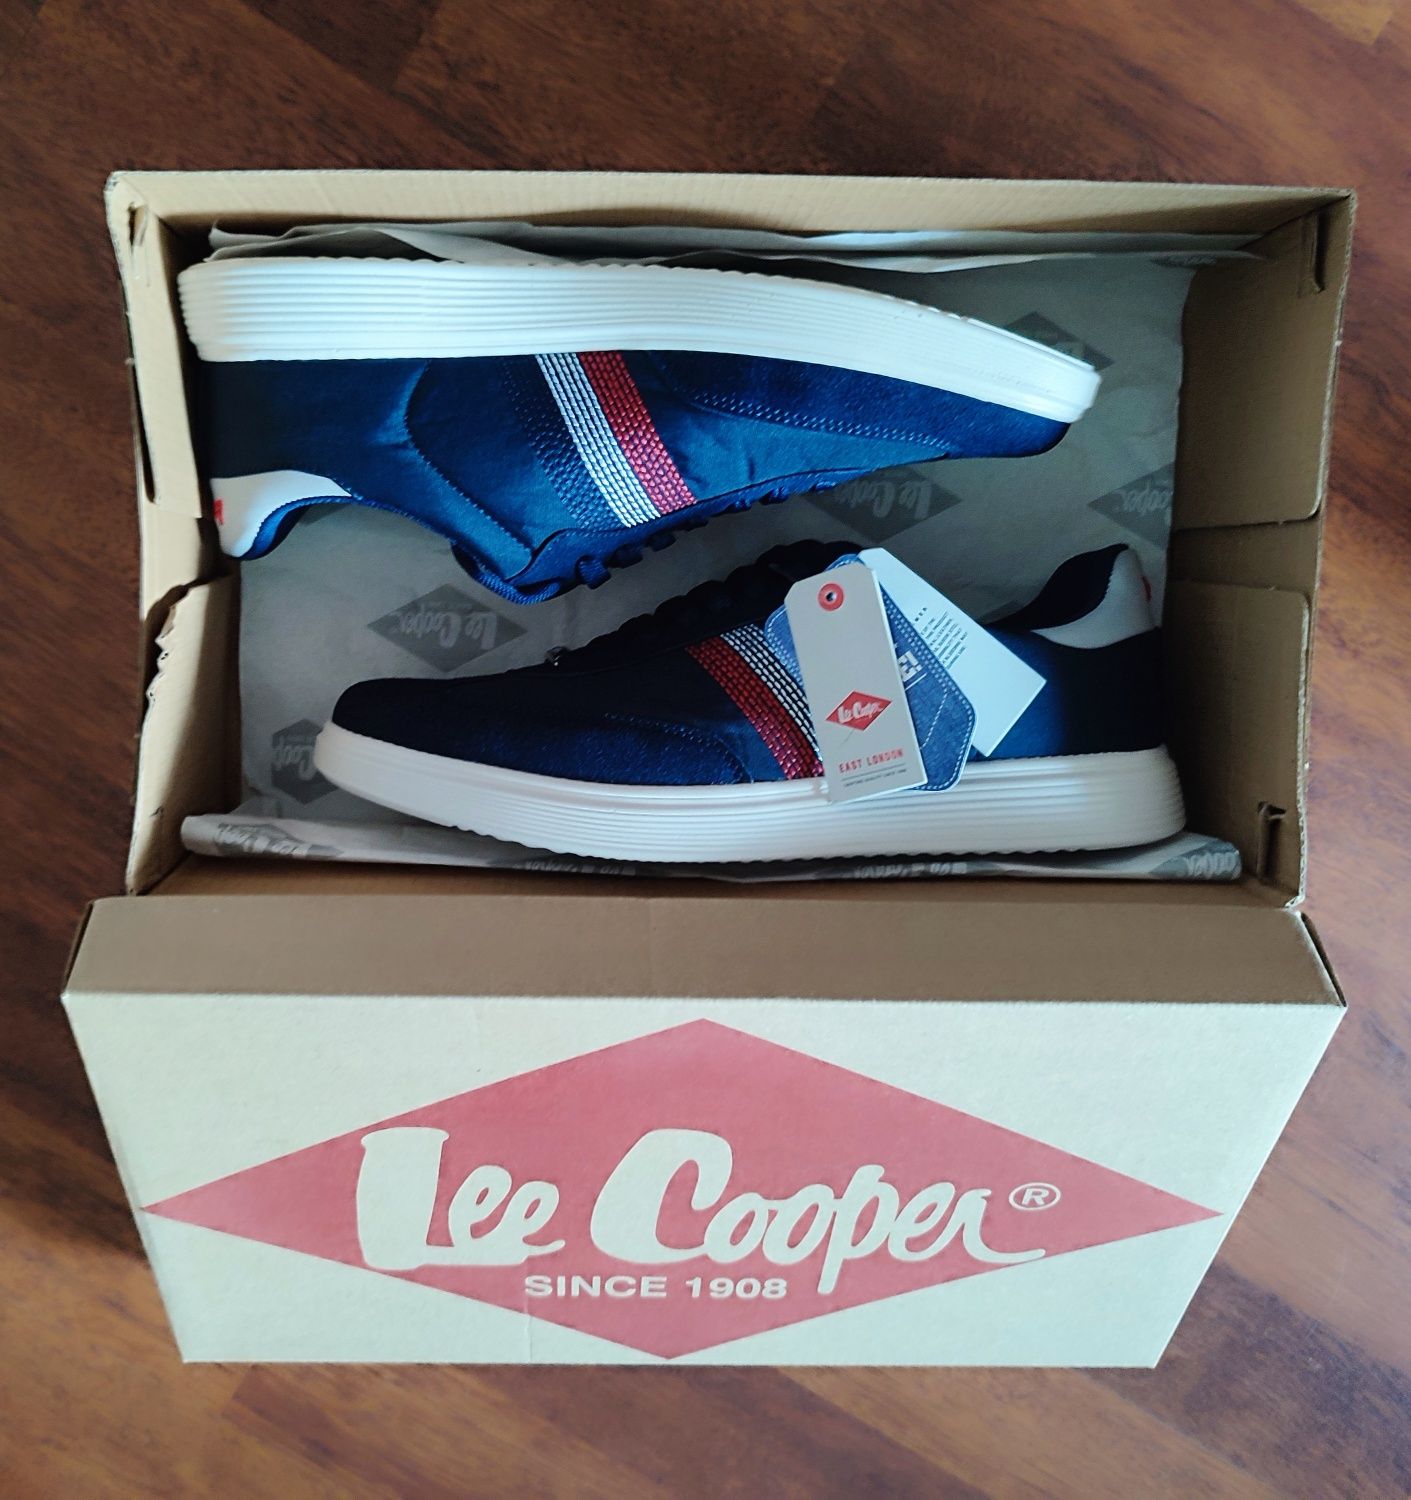 Adidasi Lee Cooper Nr 41,5